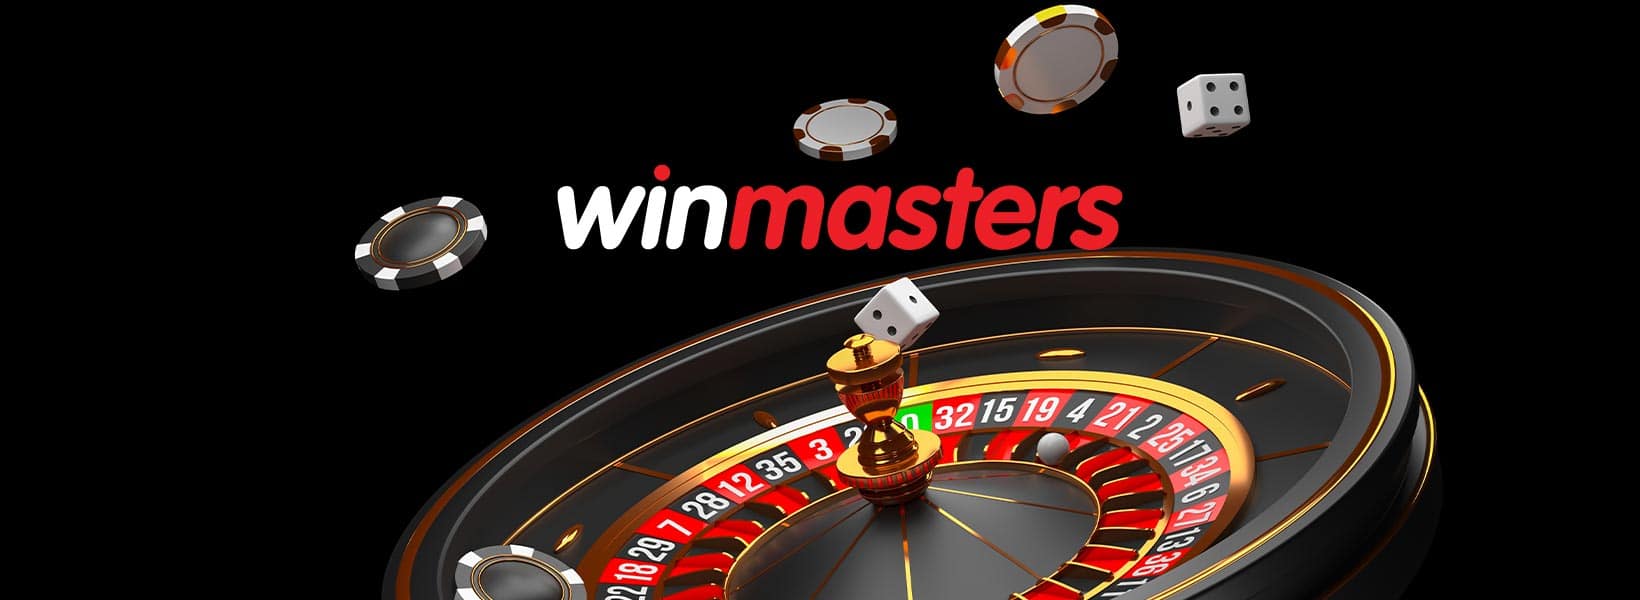 winmasters ruleta online gratis